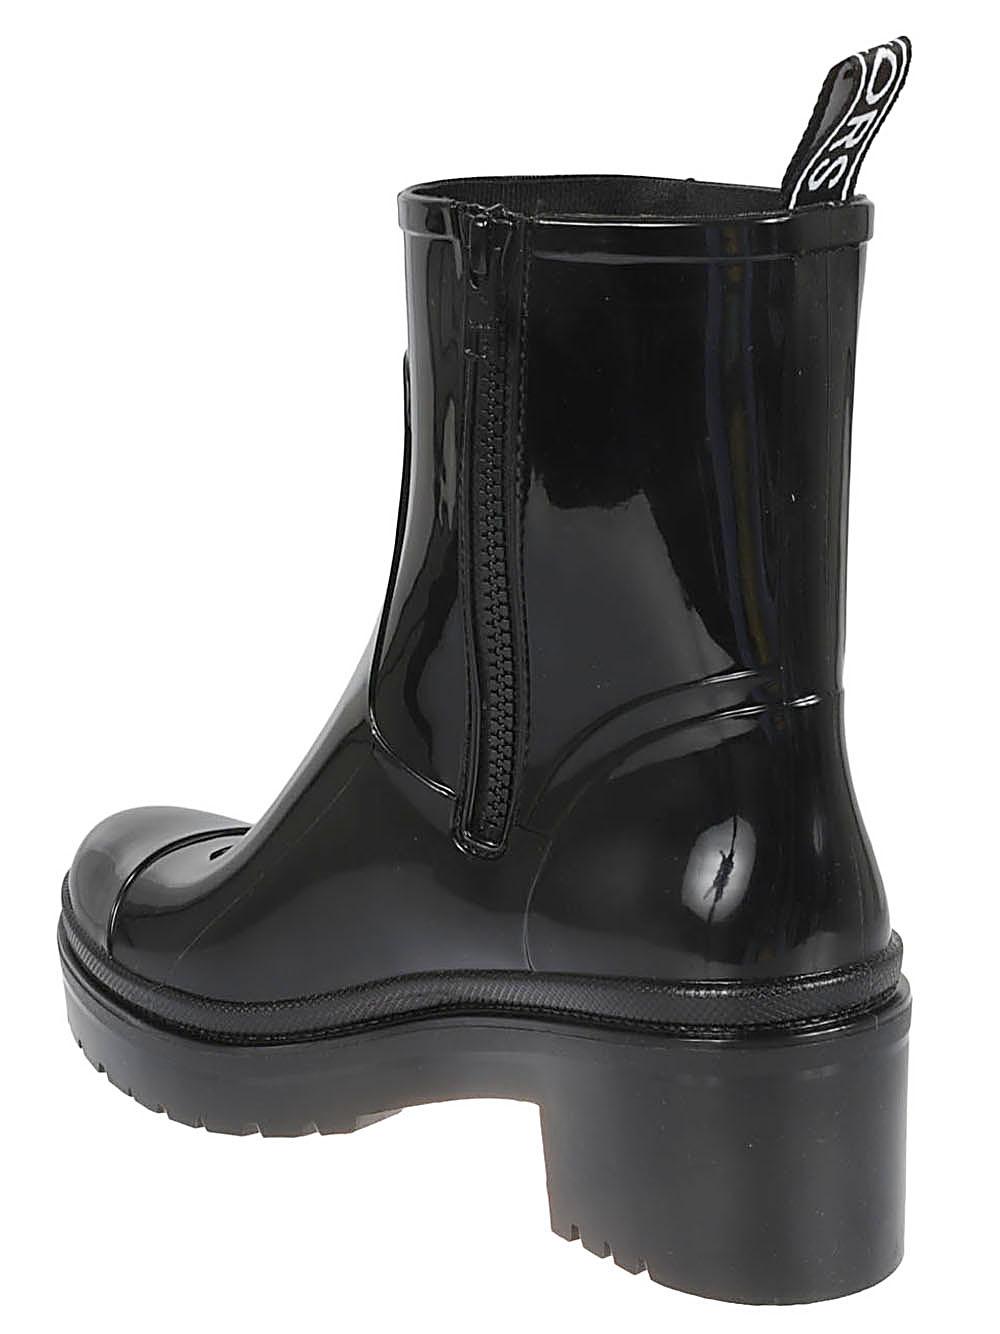 Michael Kors Womens Rain Boots Flash Sales | bellvalefarms.com